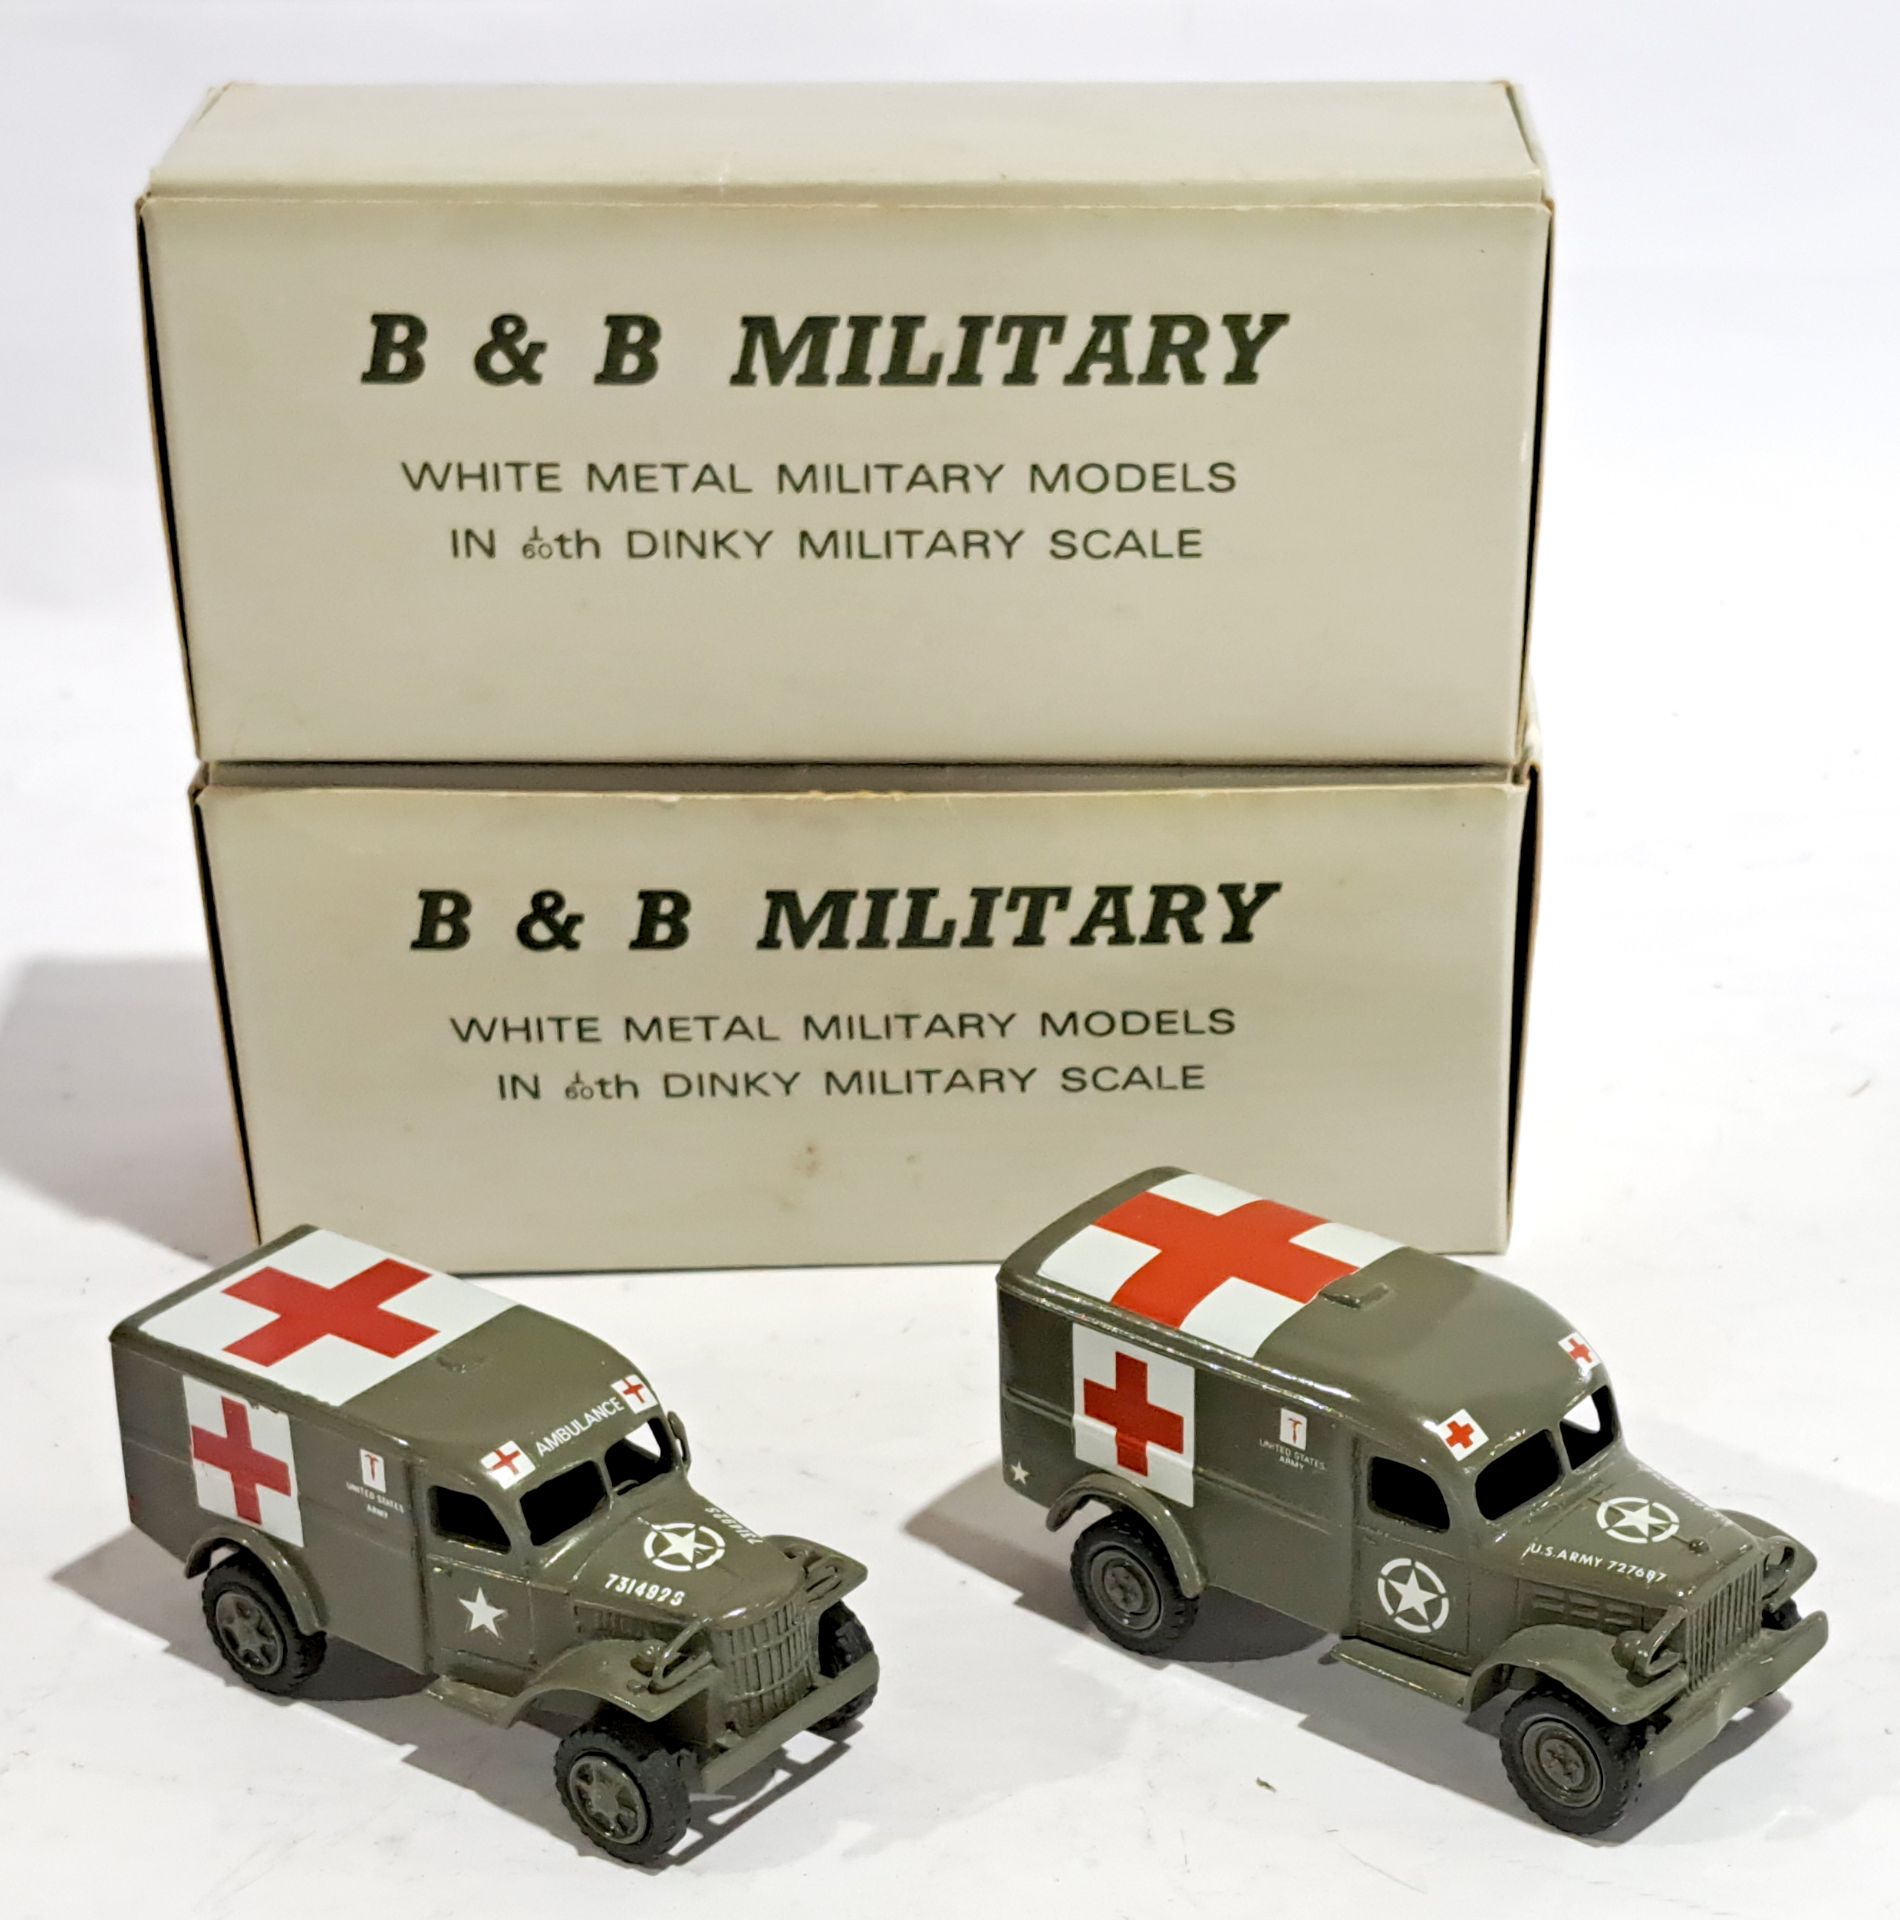 B&B Military White Metal Military Ambulance, a boxed pair